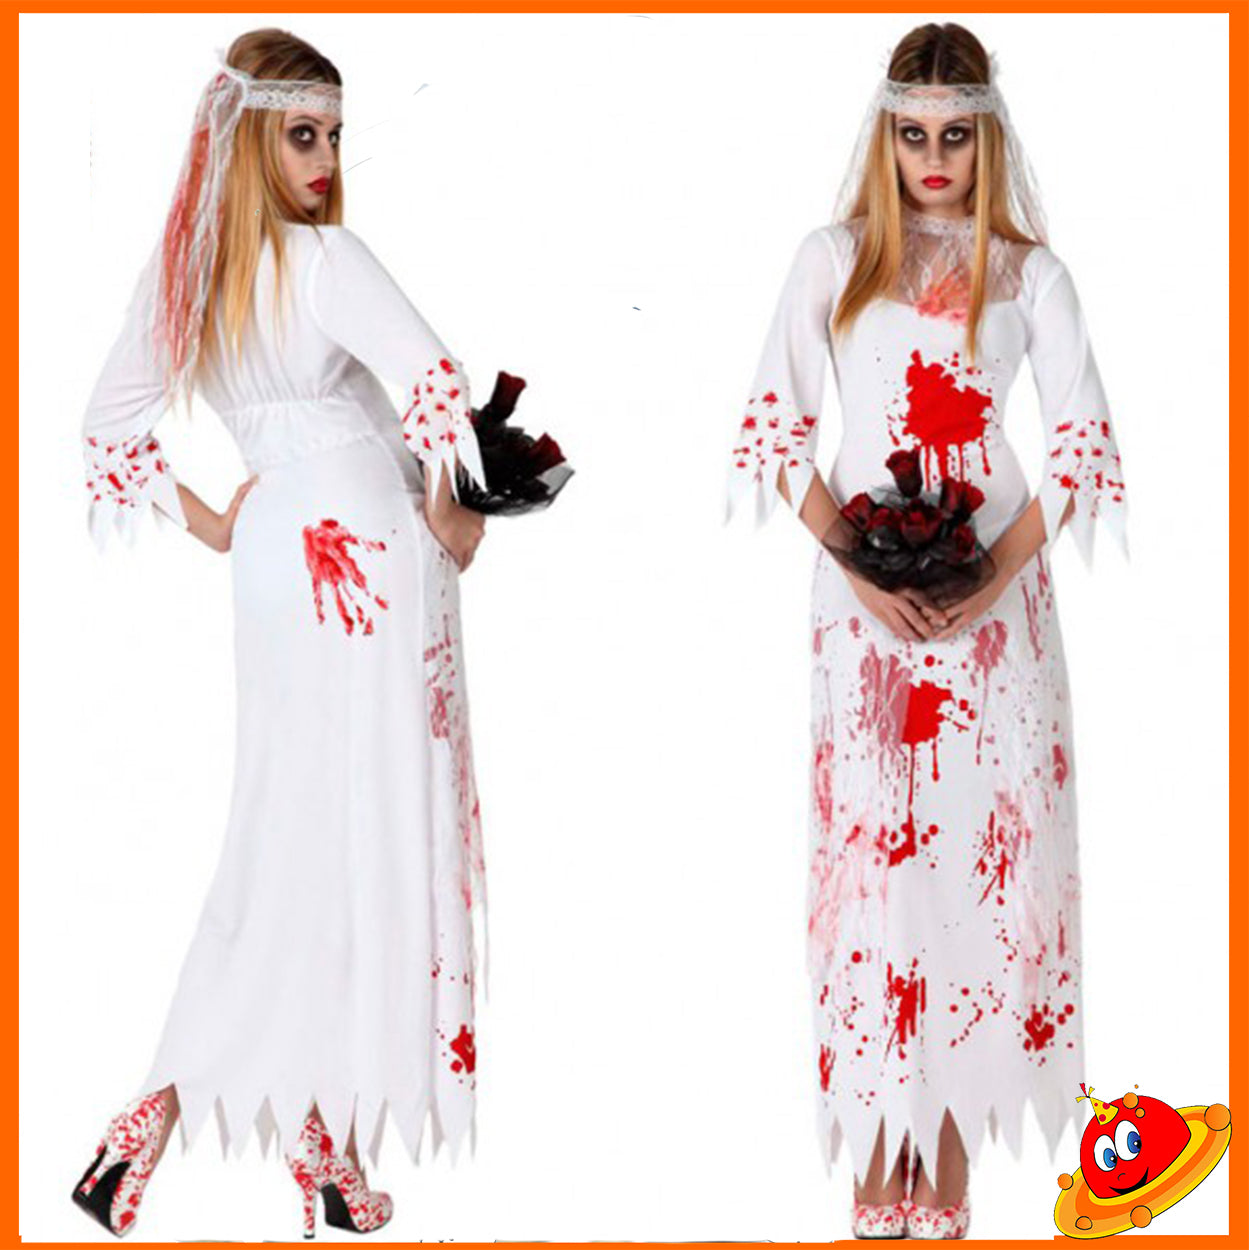 Costume Donna Sposa Insanguinata Fantasma Tg 36a42